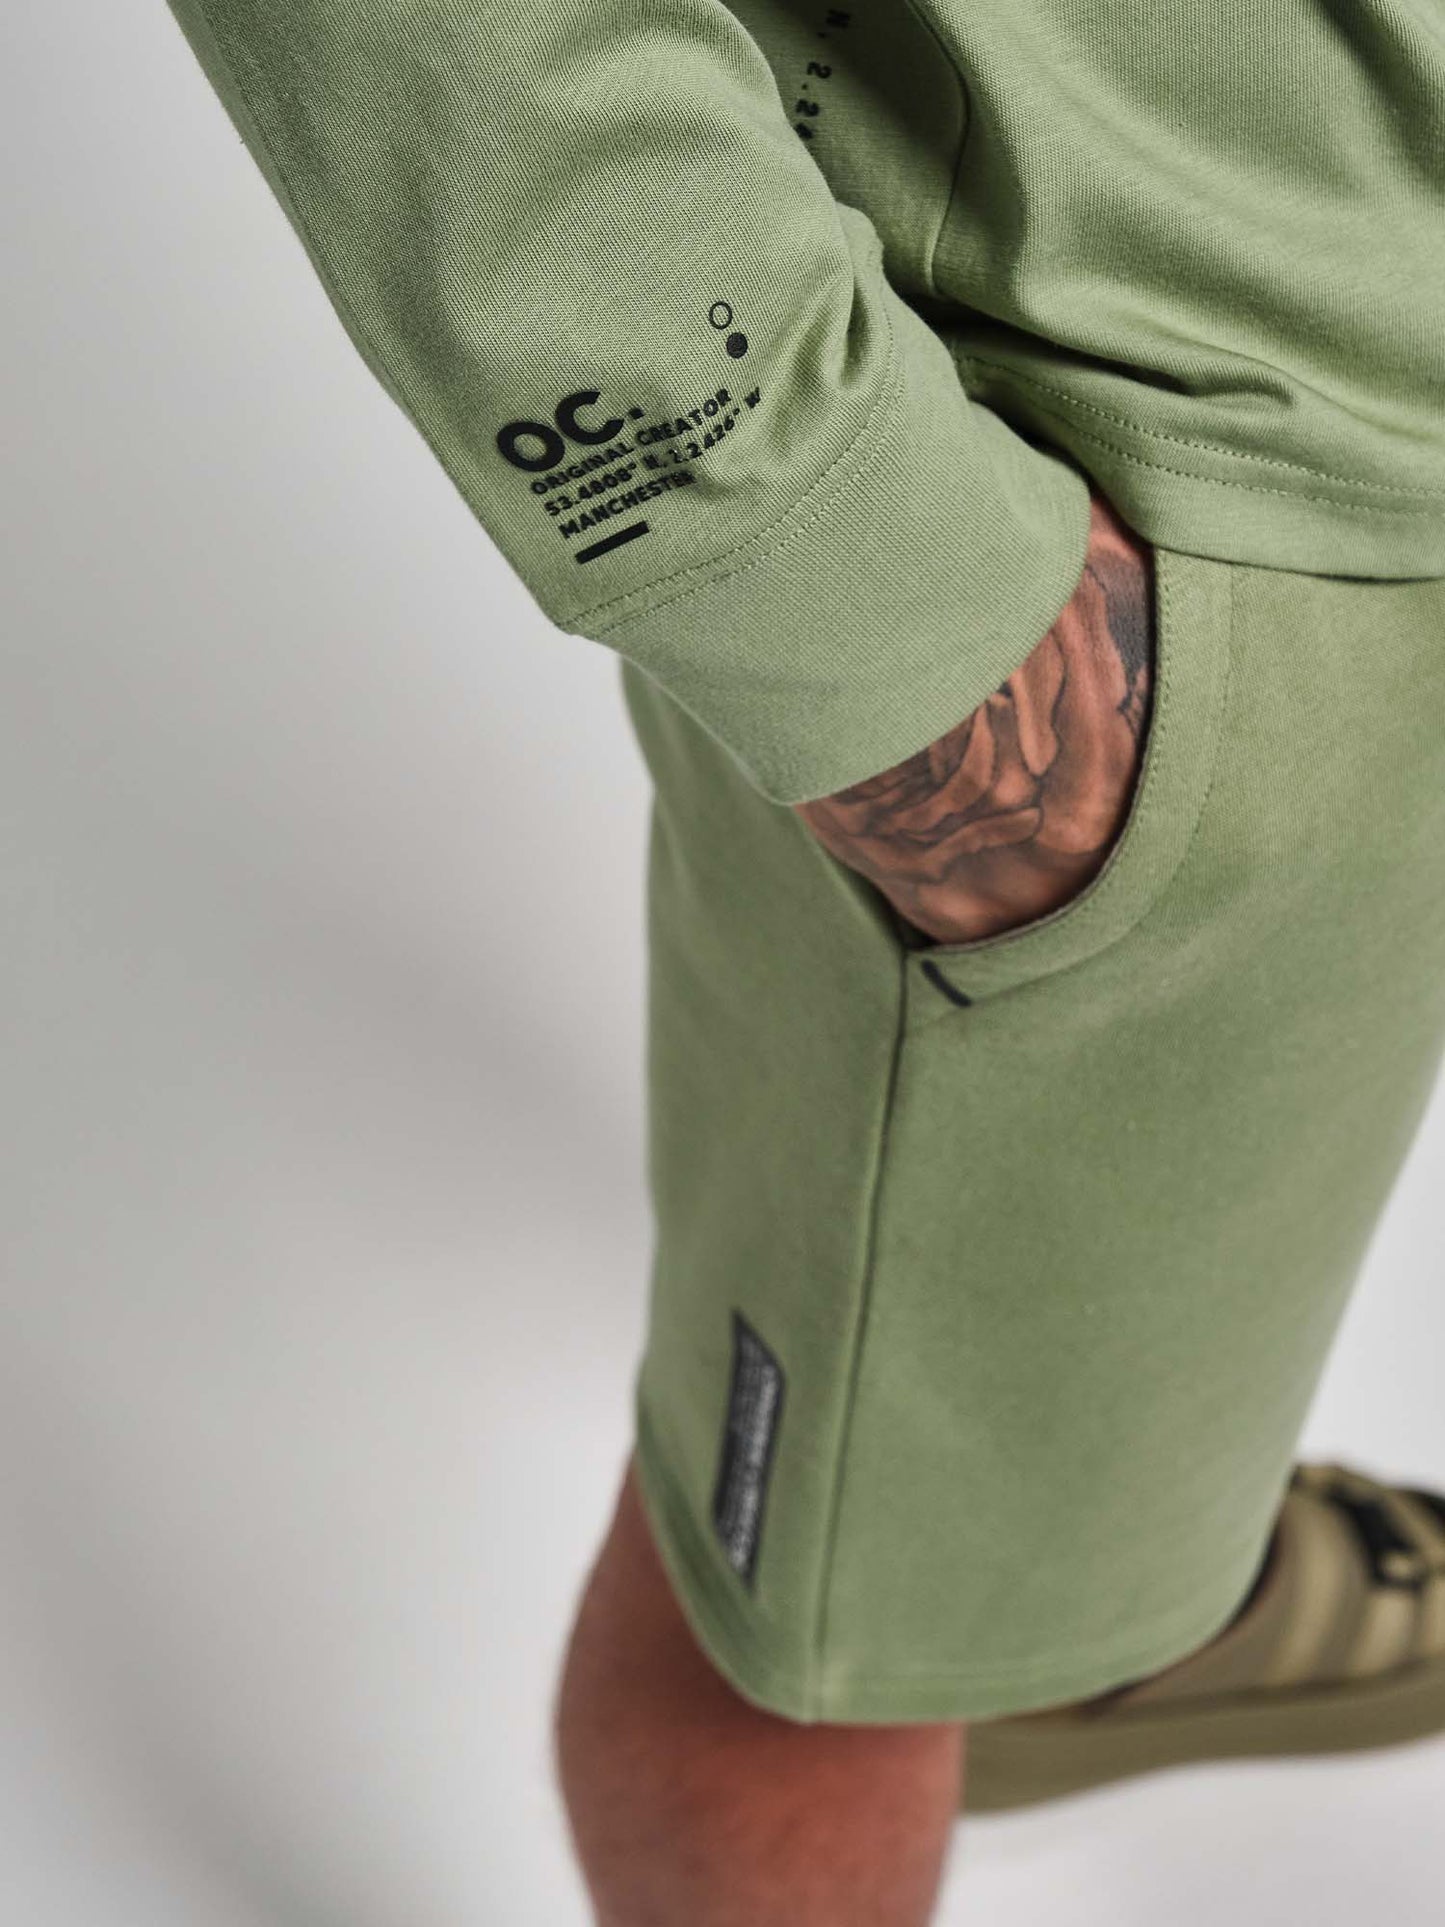 OC. Long Sleeve T-Shirt - Sage Green